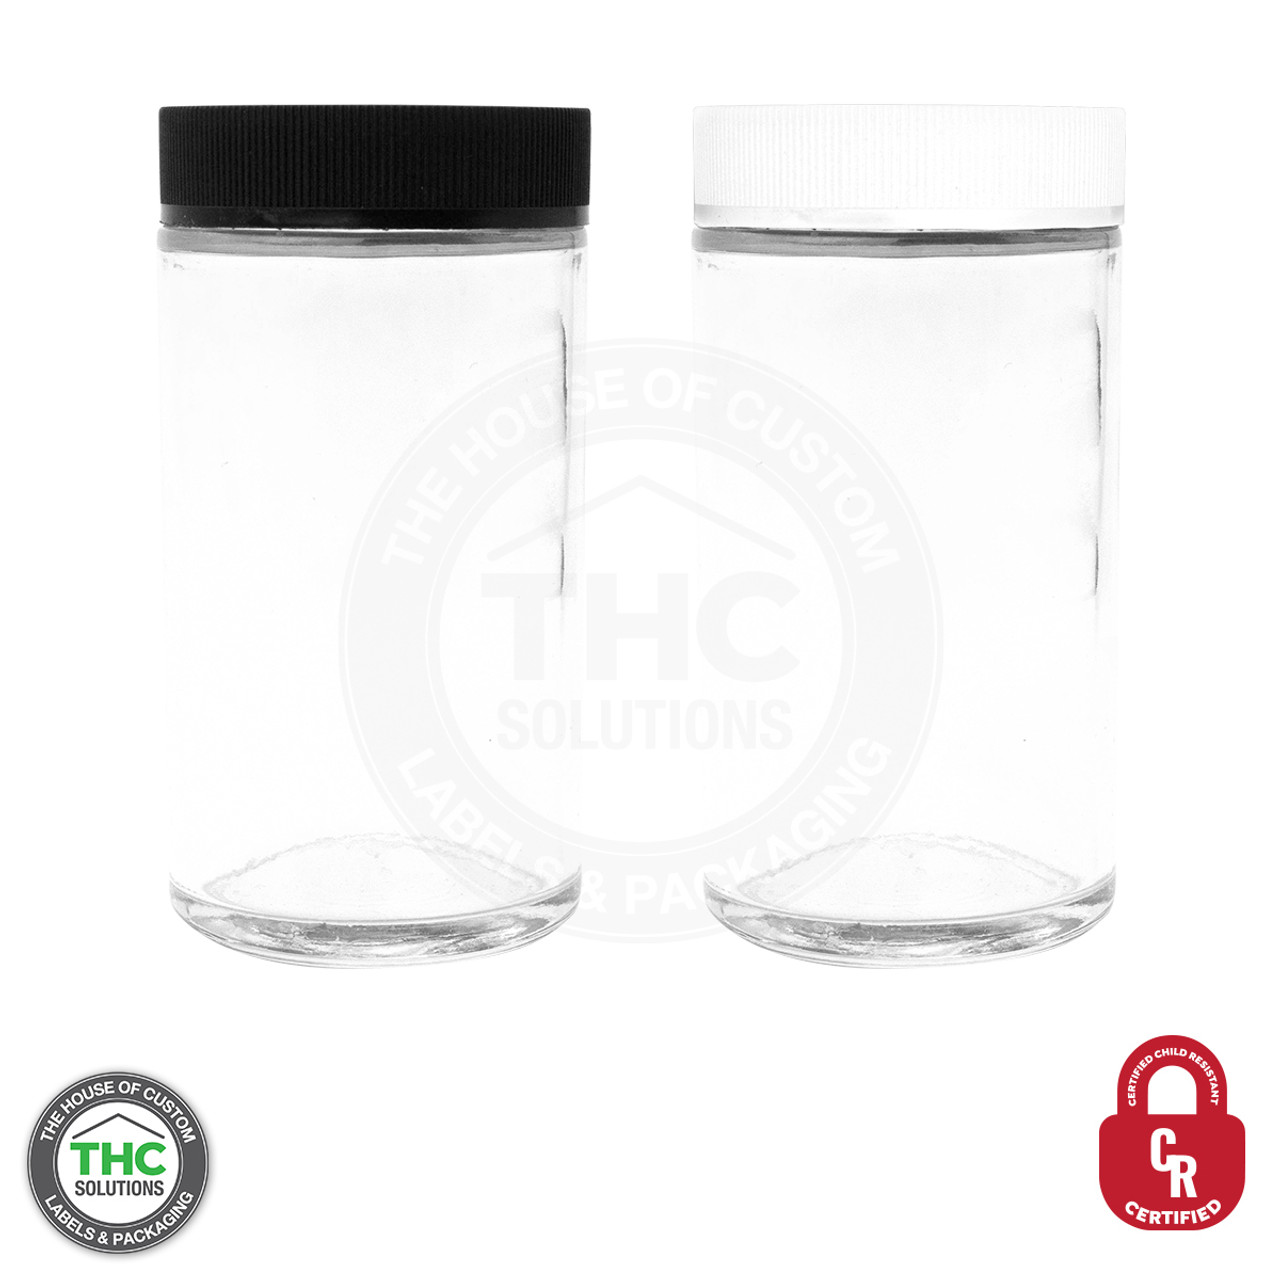 8 oz Lidded Glass Jar